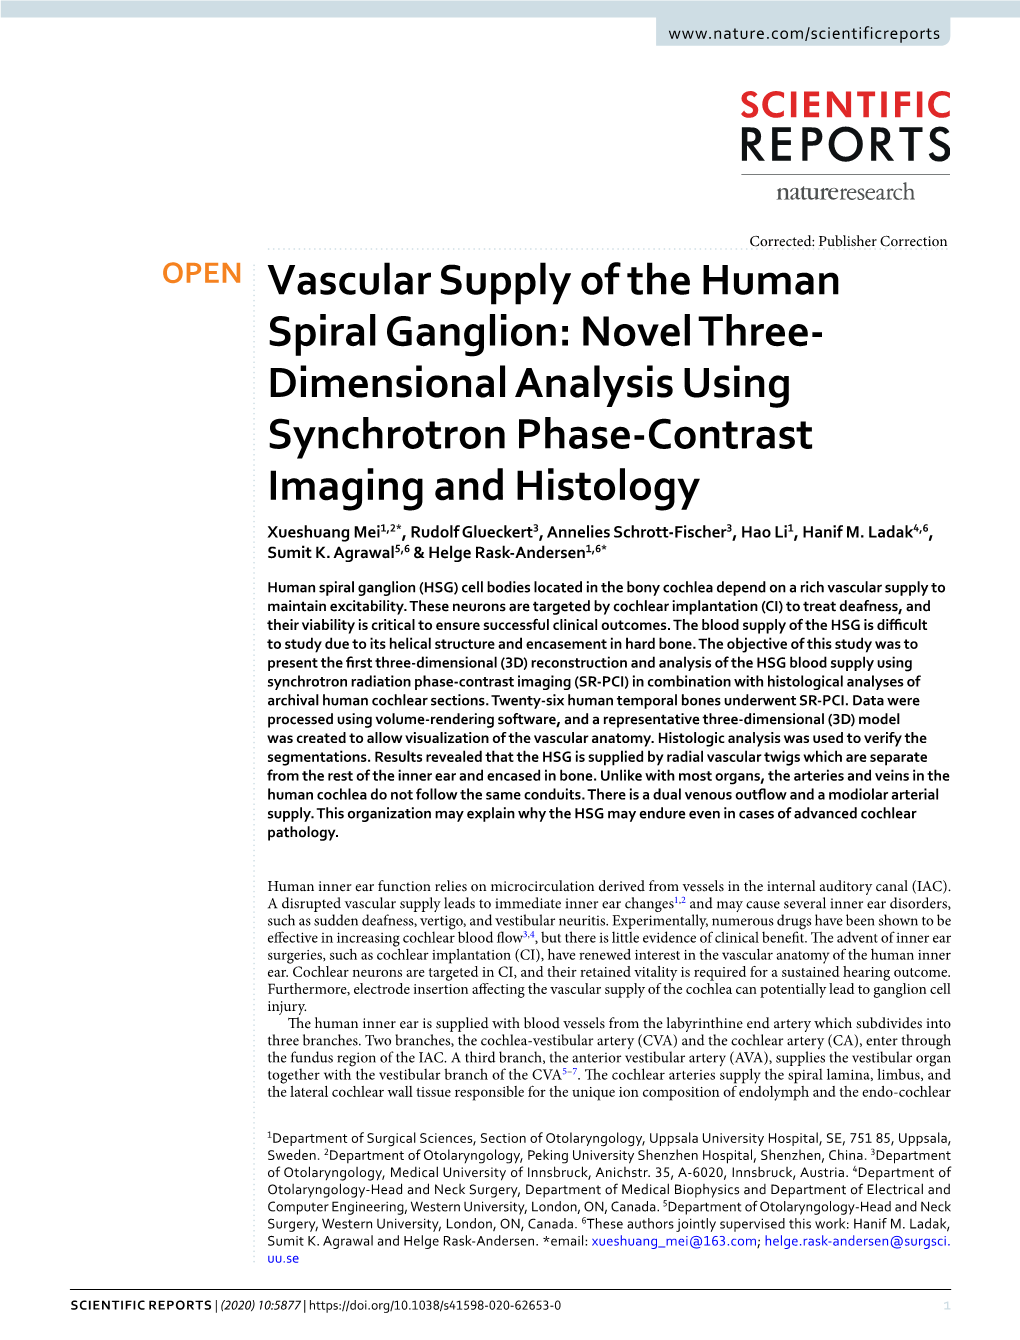 Vascular Supply of the Human Spiral Ganglion: Novel Three